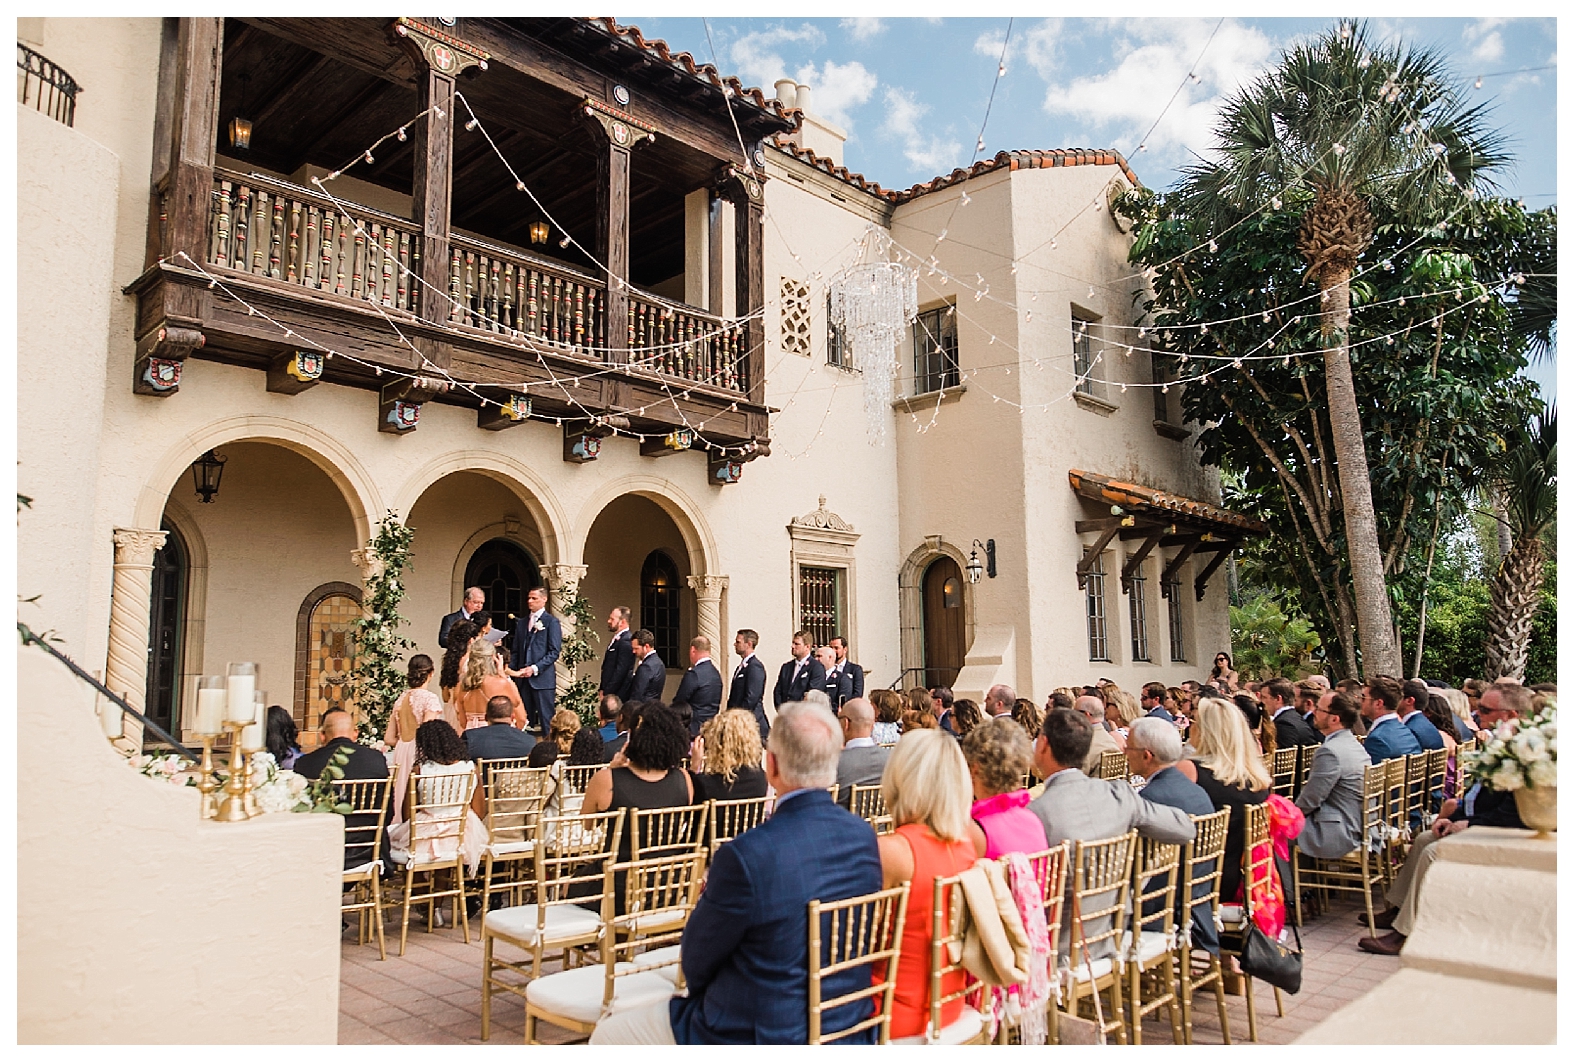 Best Central Florida Wedding Venues, Best Central Florida Wedding Venues - JCanelas Photography